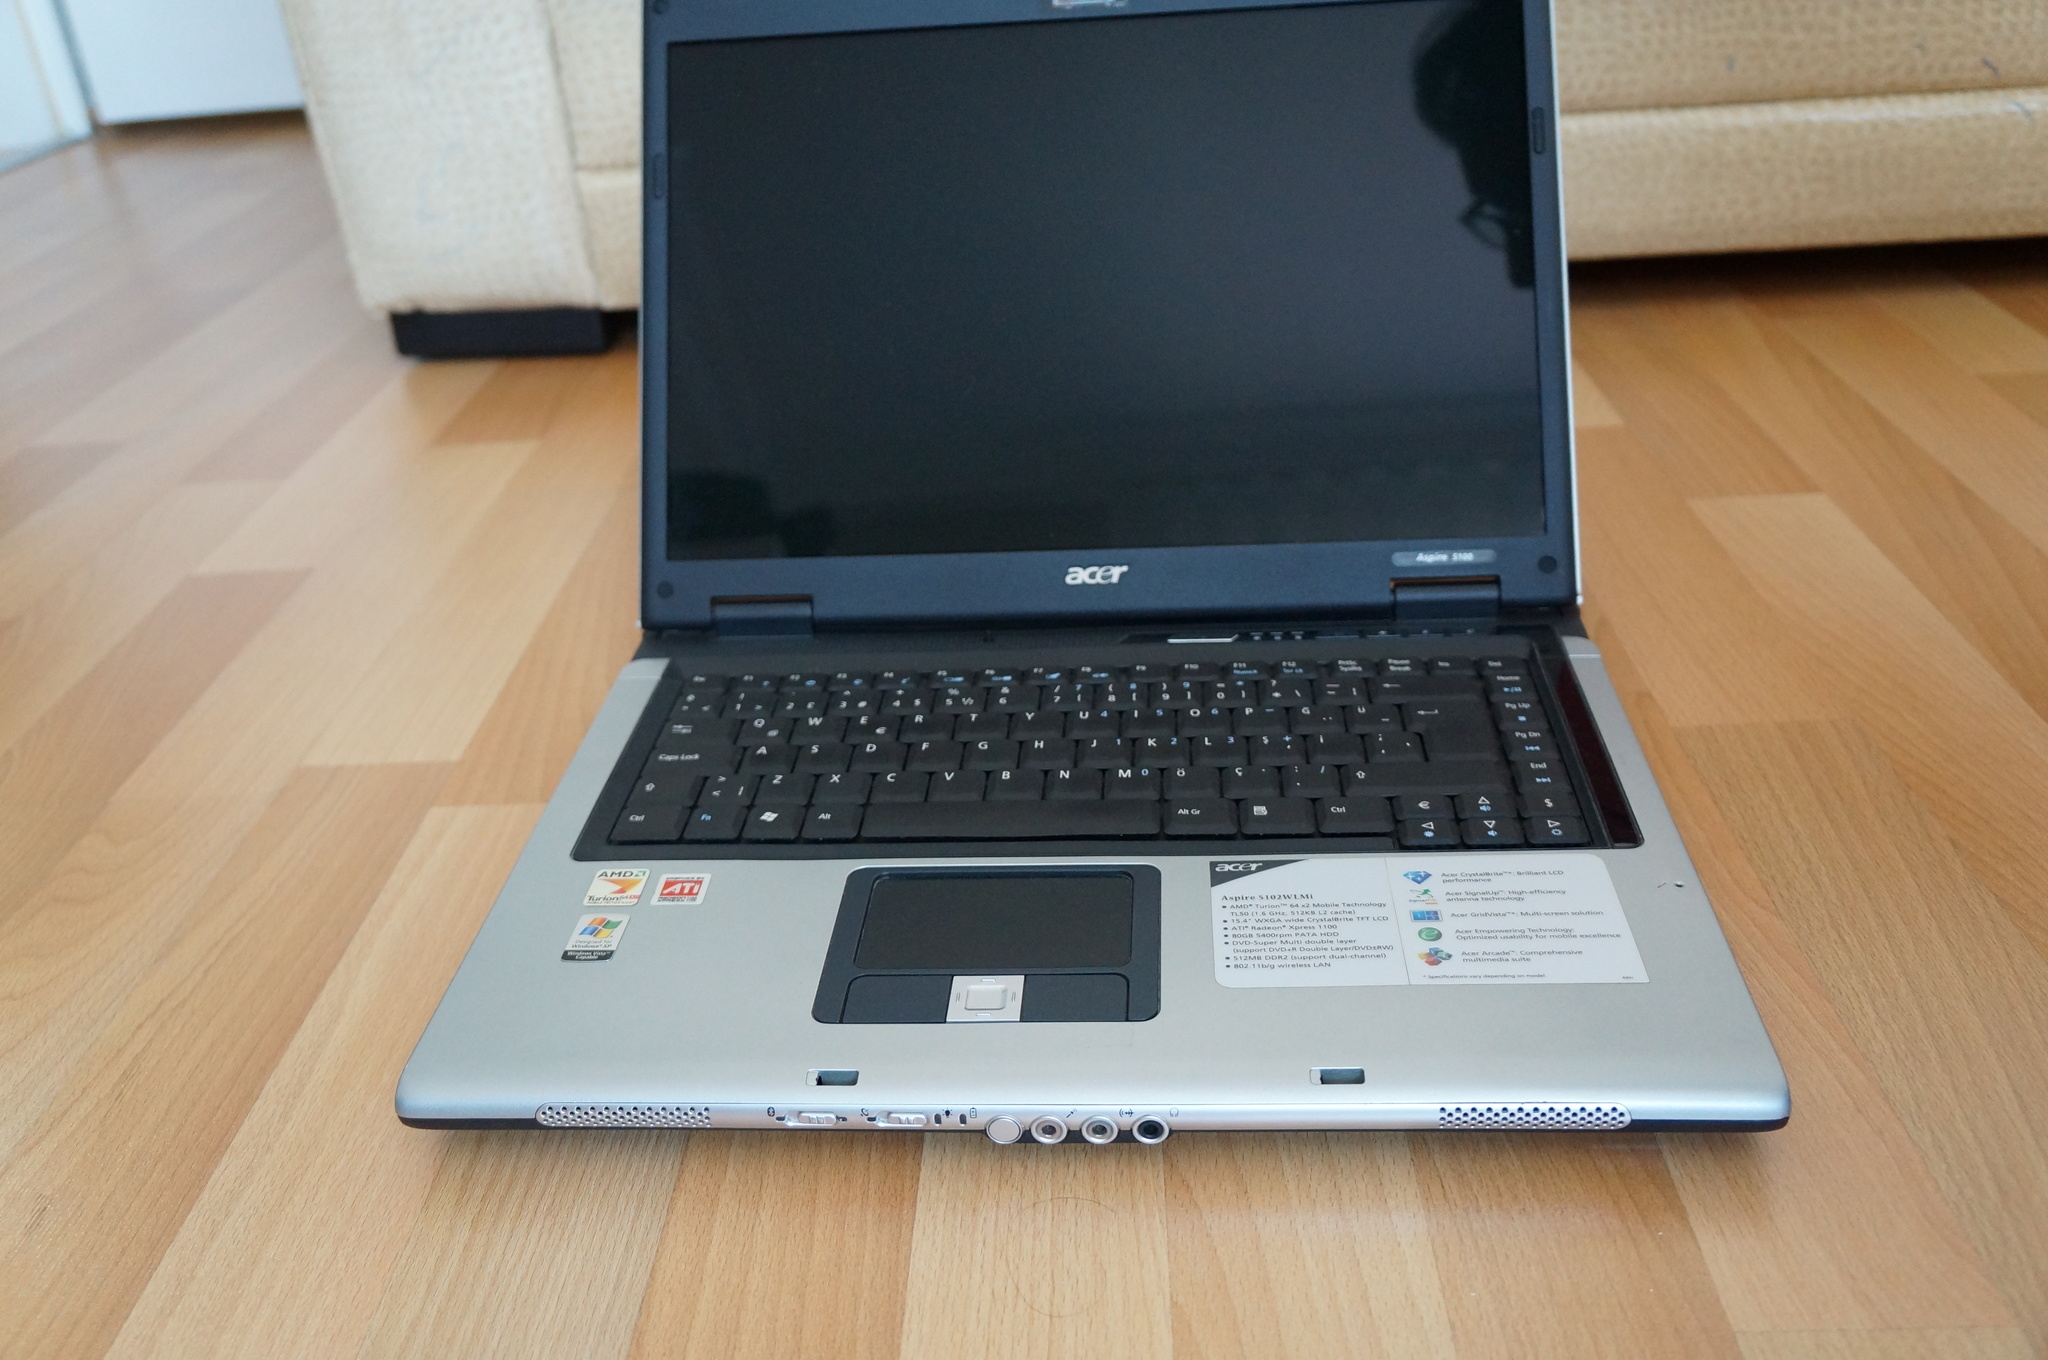  Satılık HP Probook ve Acer Marka 2 Adet Notebook...